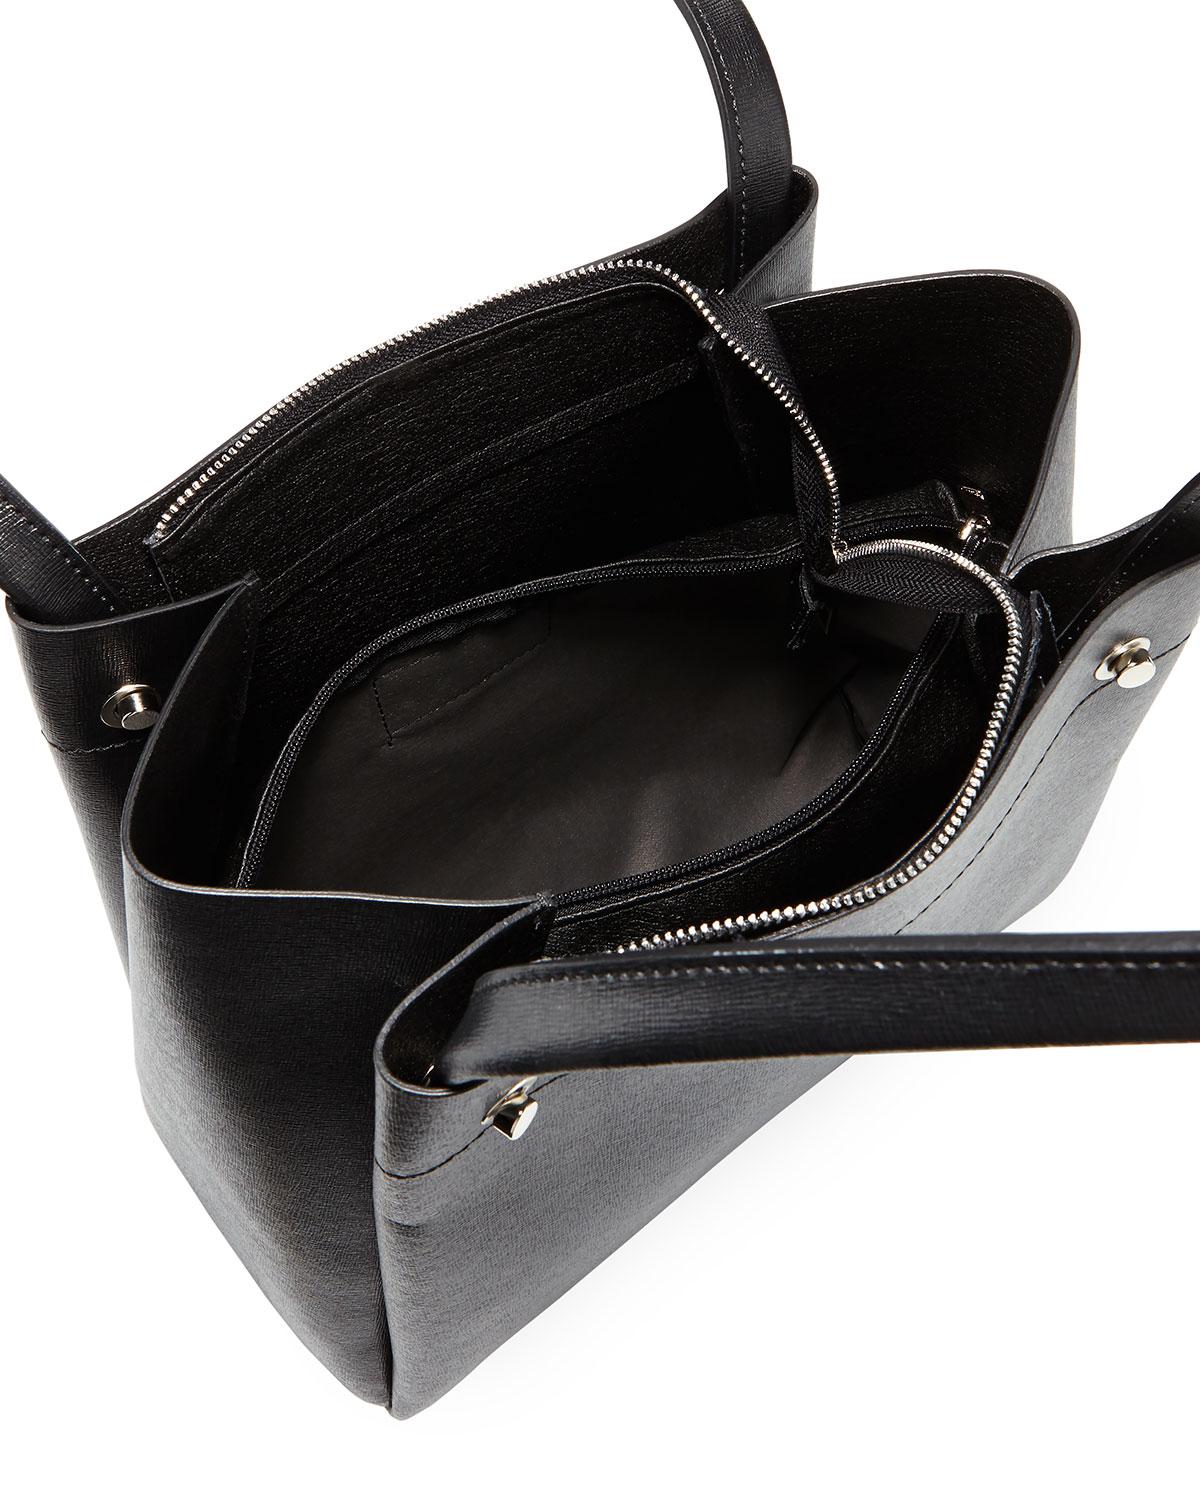 Neiman Marcus Saffiano Leather Tote Bag in Black - Lyst